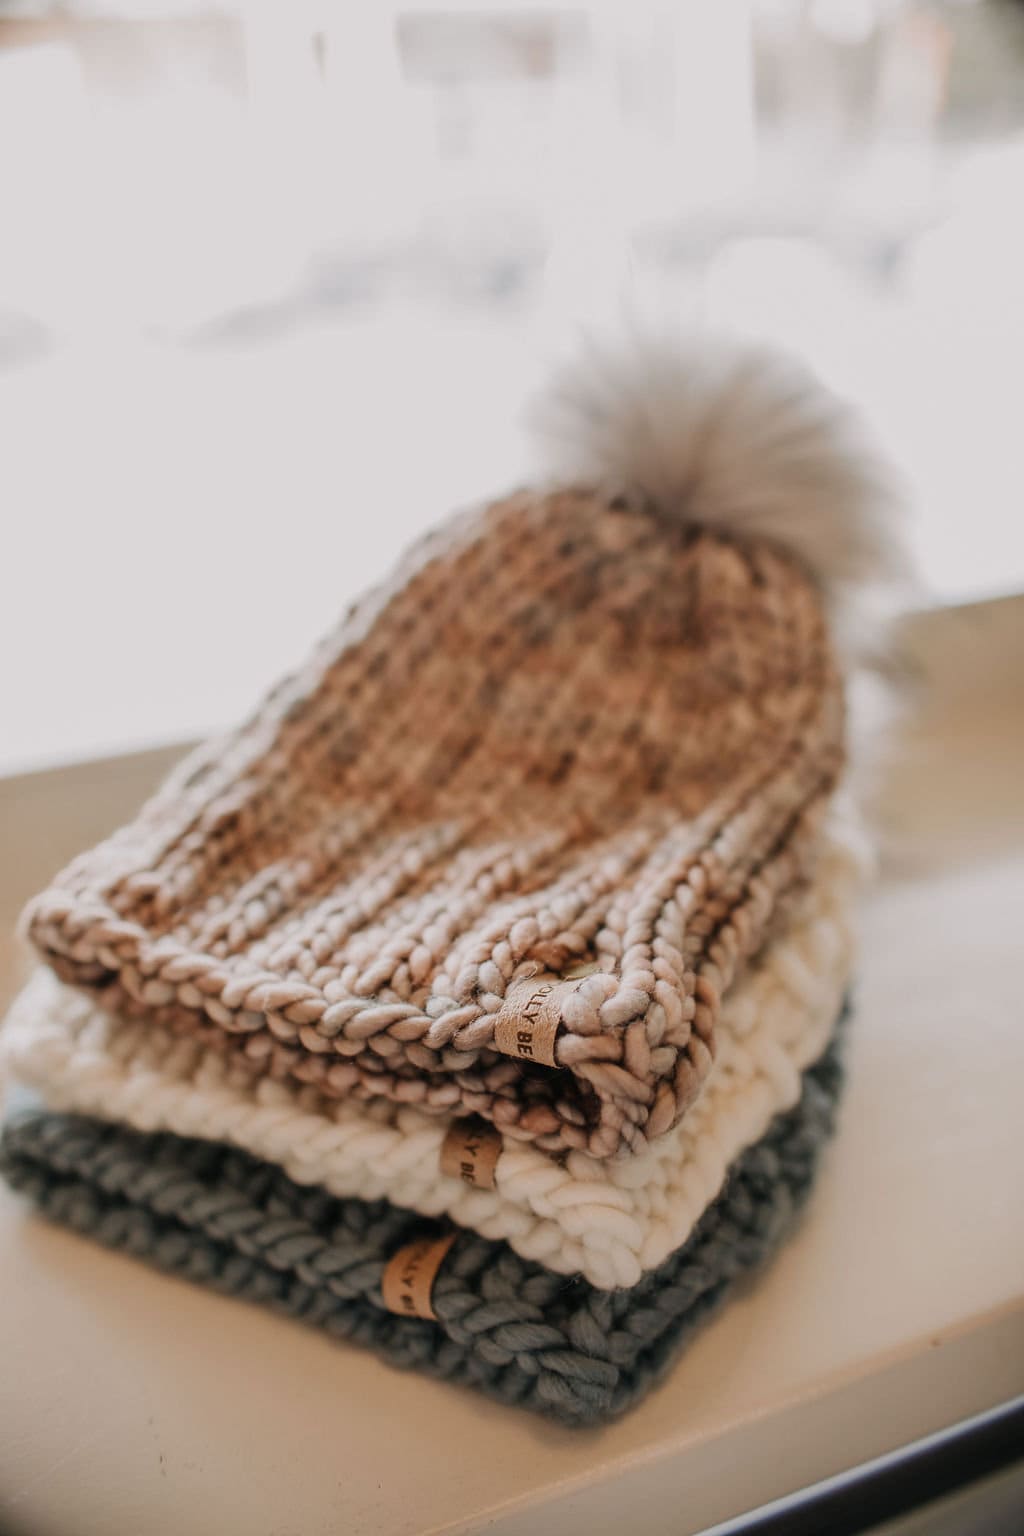 Pearl Gray Merino Wool Knit Hat with Faux Fur Pom Pom – Woolly Bear Knits